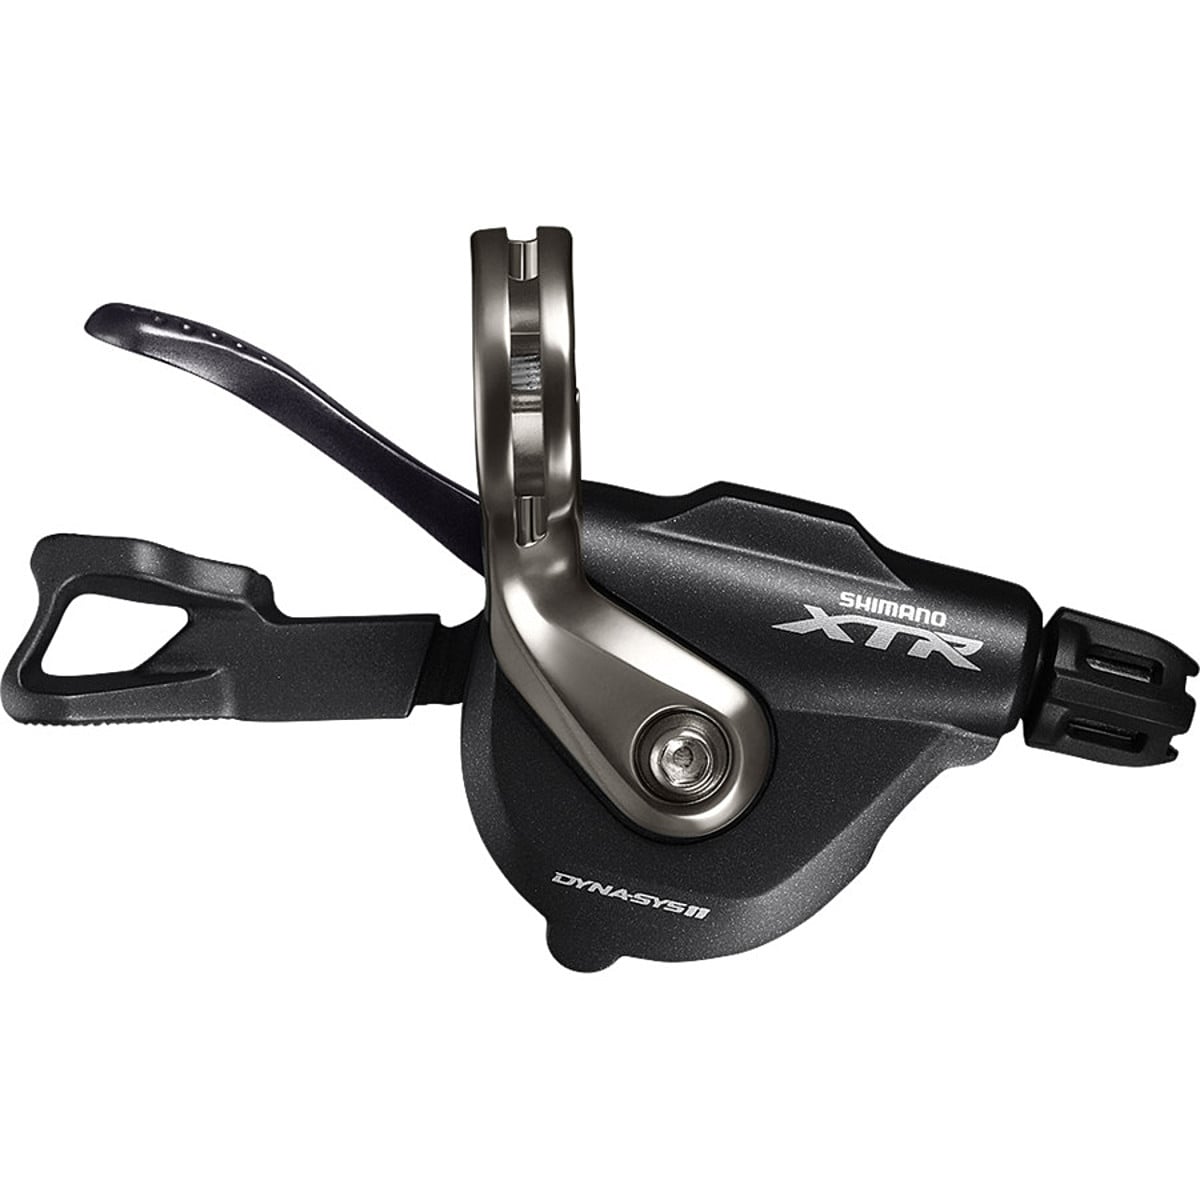 Shimano XTR SL M9000 Trigger Shifters